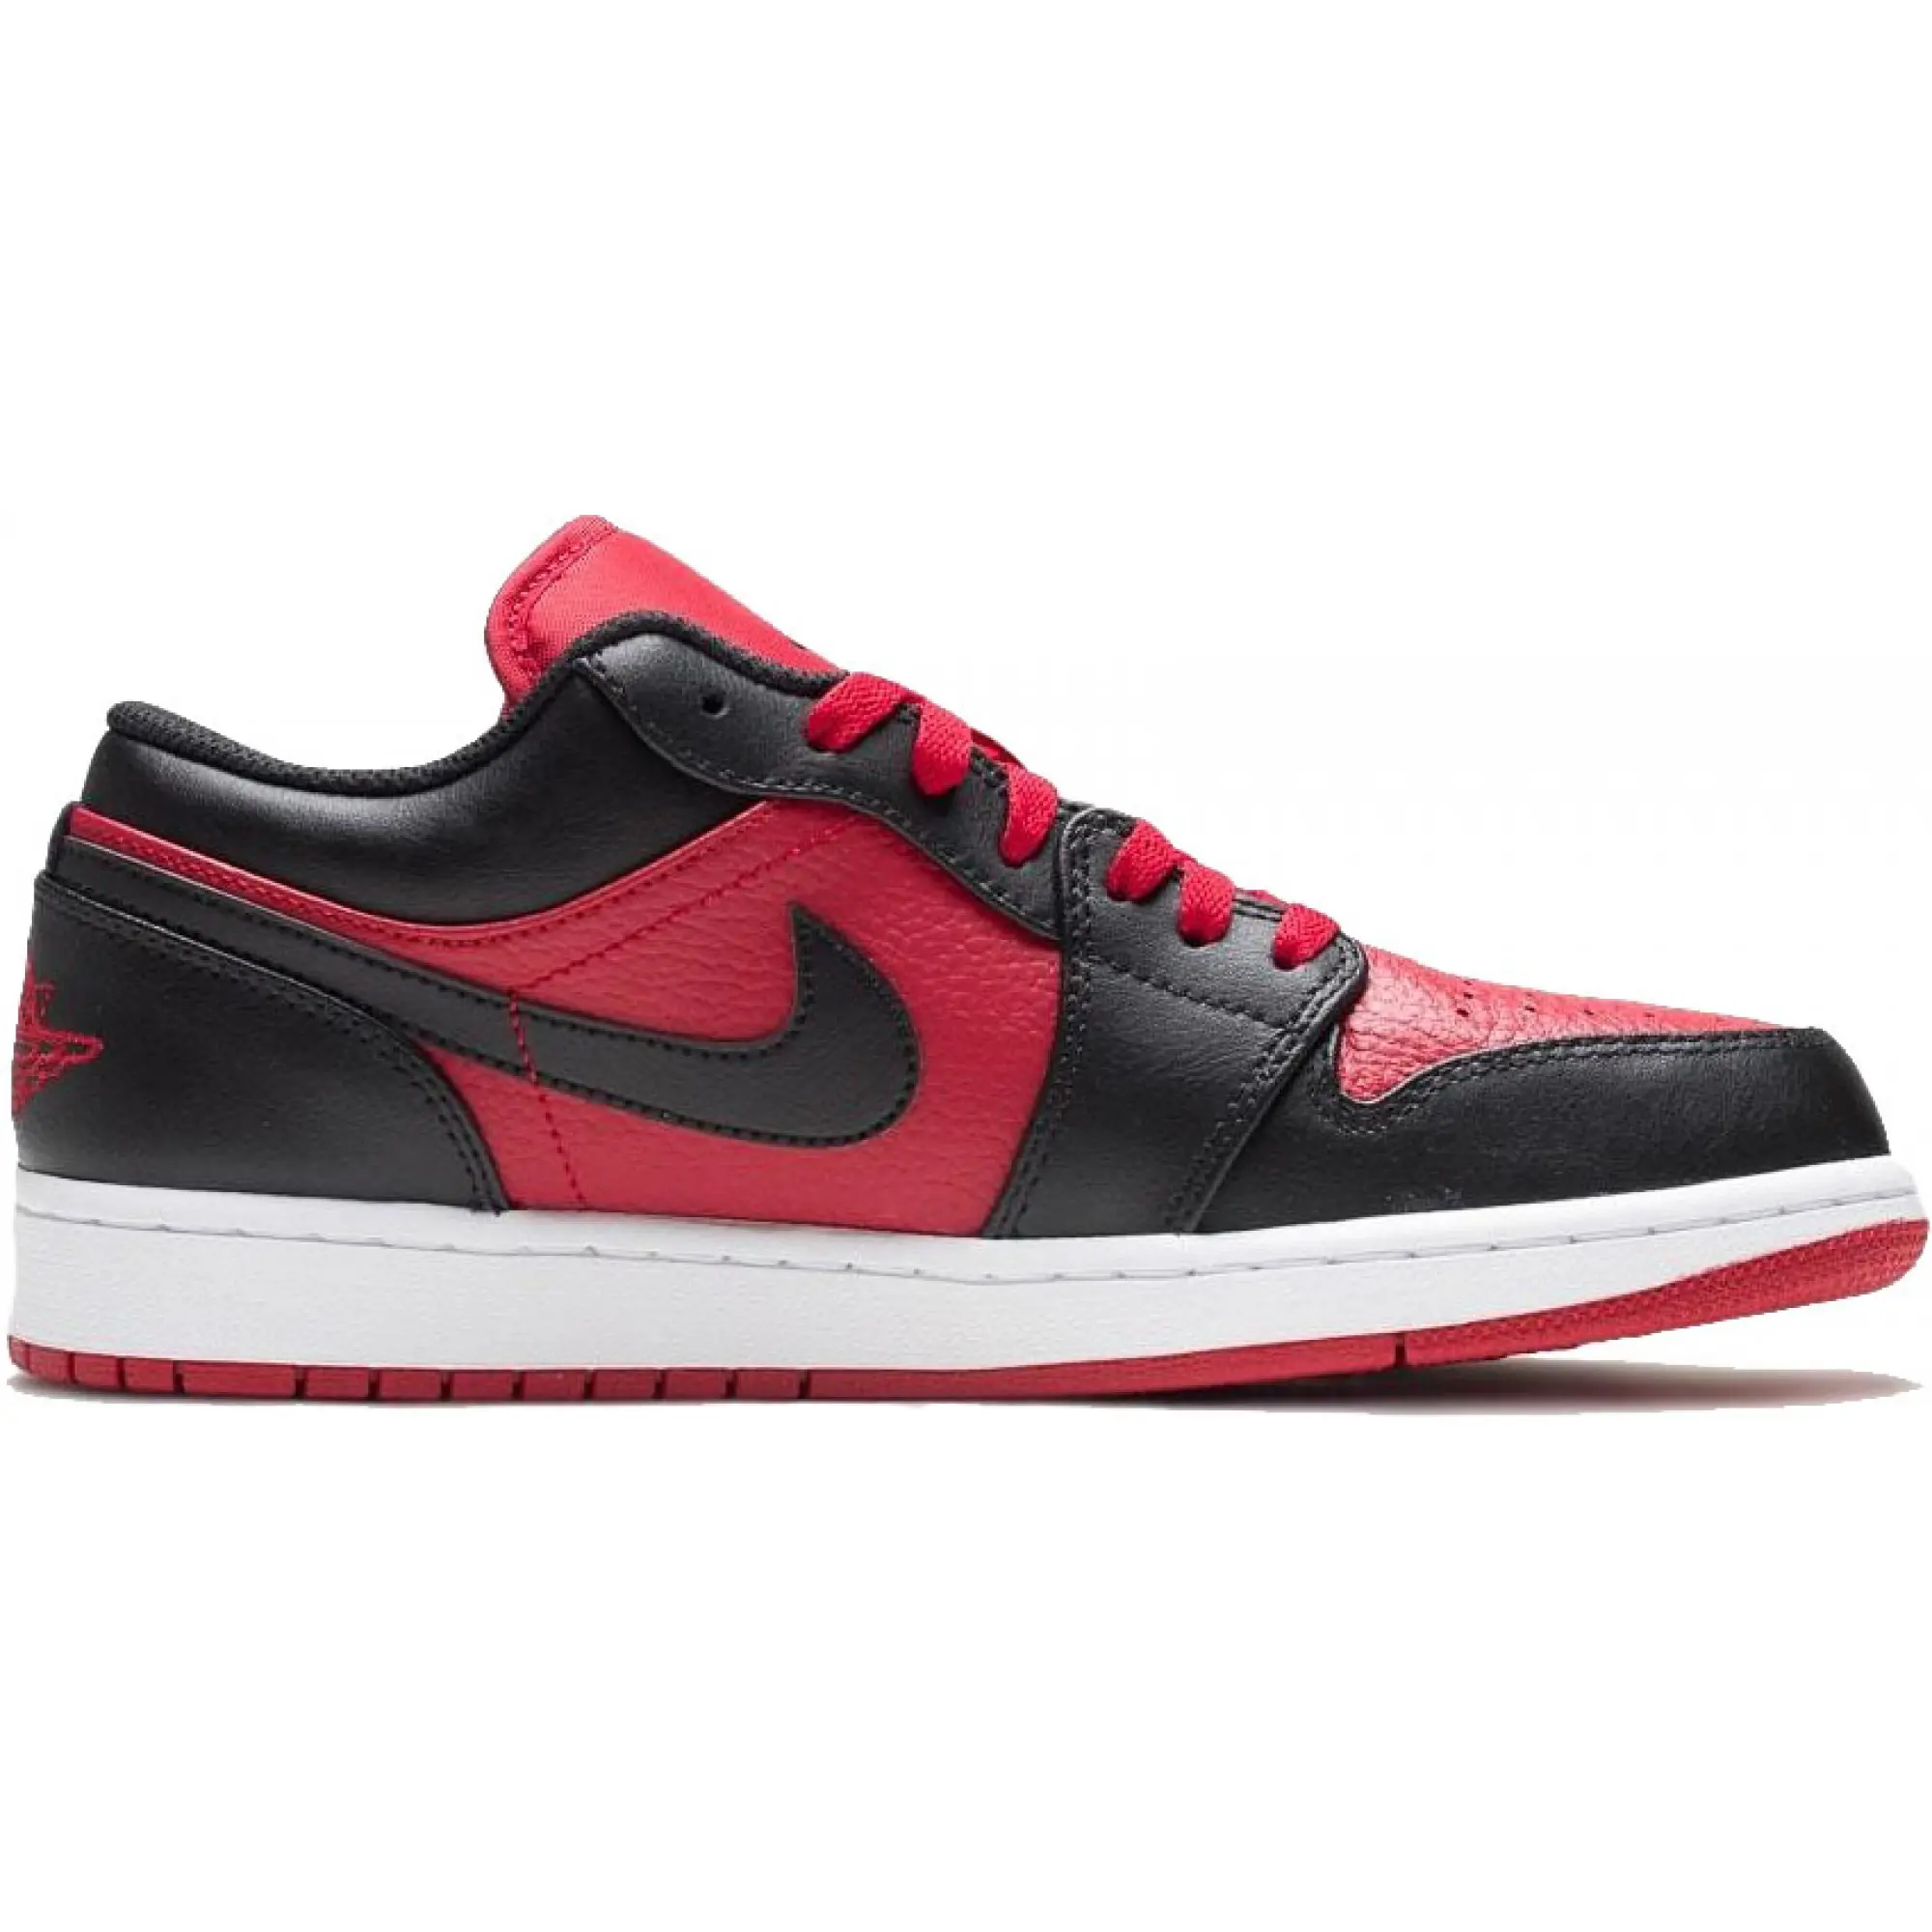 Найк 1 лоу. Nike Air Jordan 1 Low Red. Nike Air Jordan 1 Low Red Black White. Nike Air Jordan 1 Low красные.